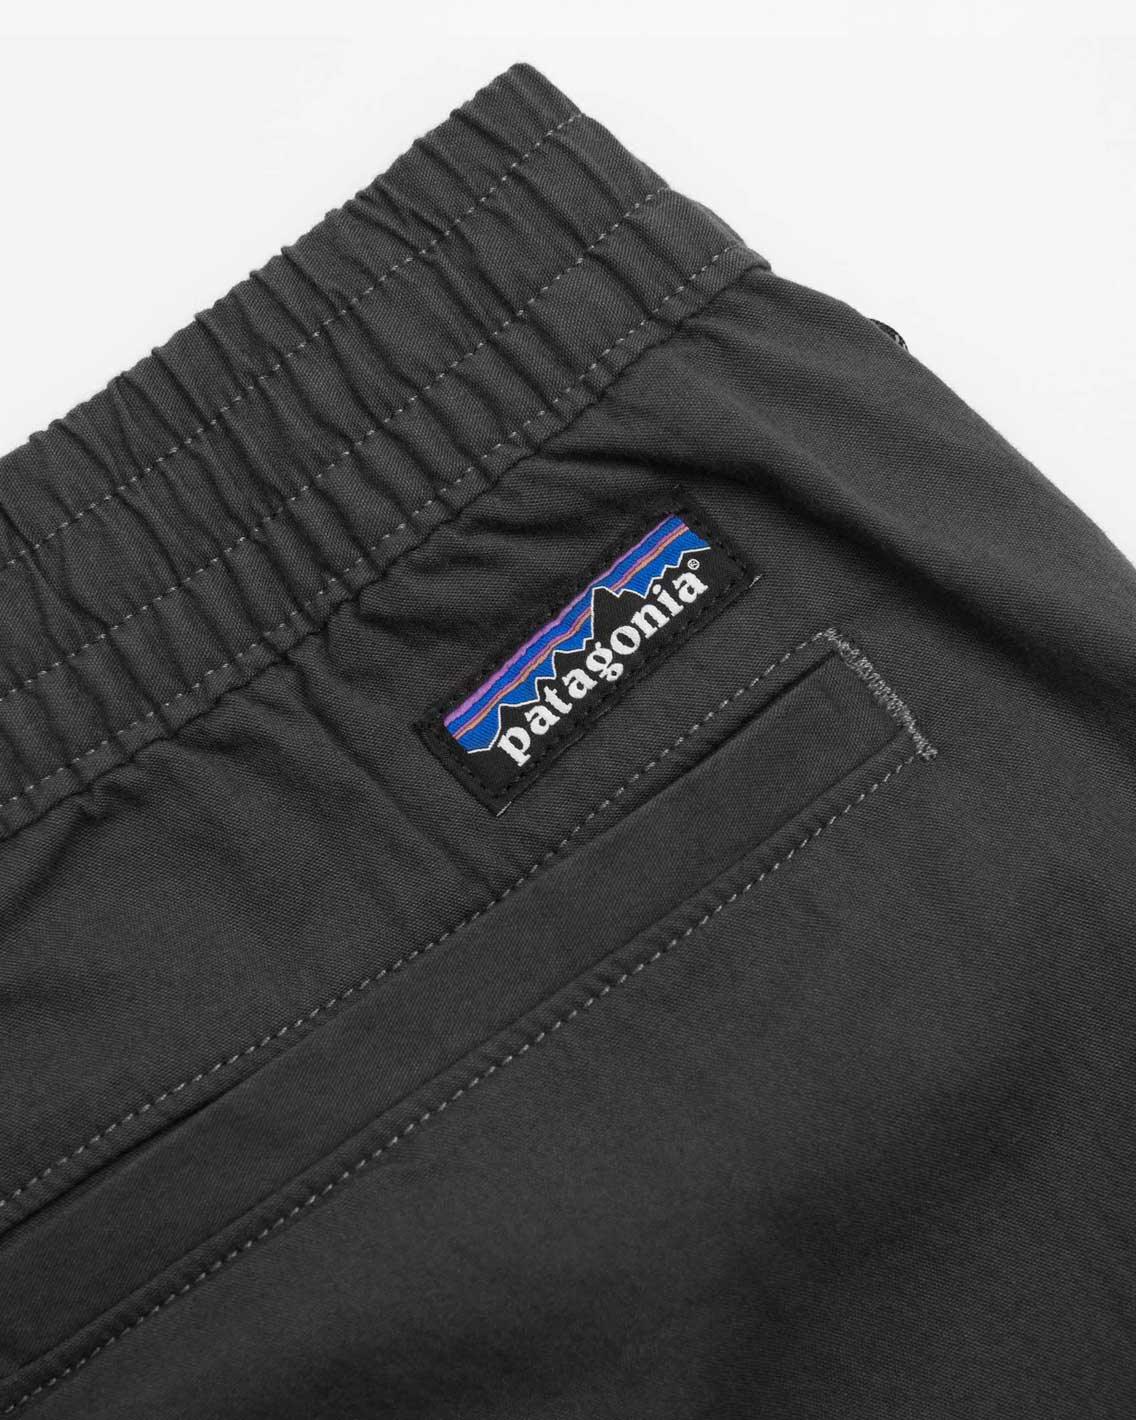 Patagonia - Nomader Shorts - Ink Black Shorts Patagonia   